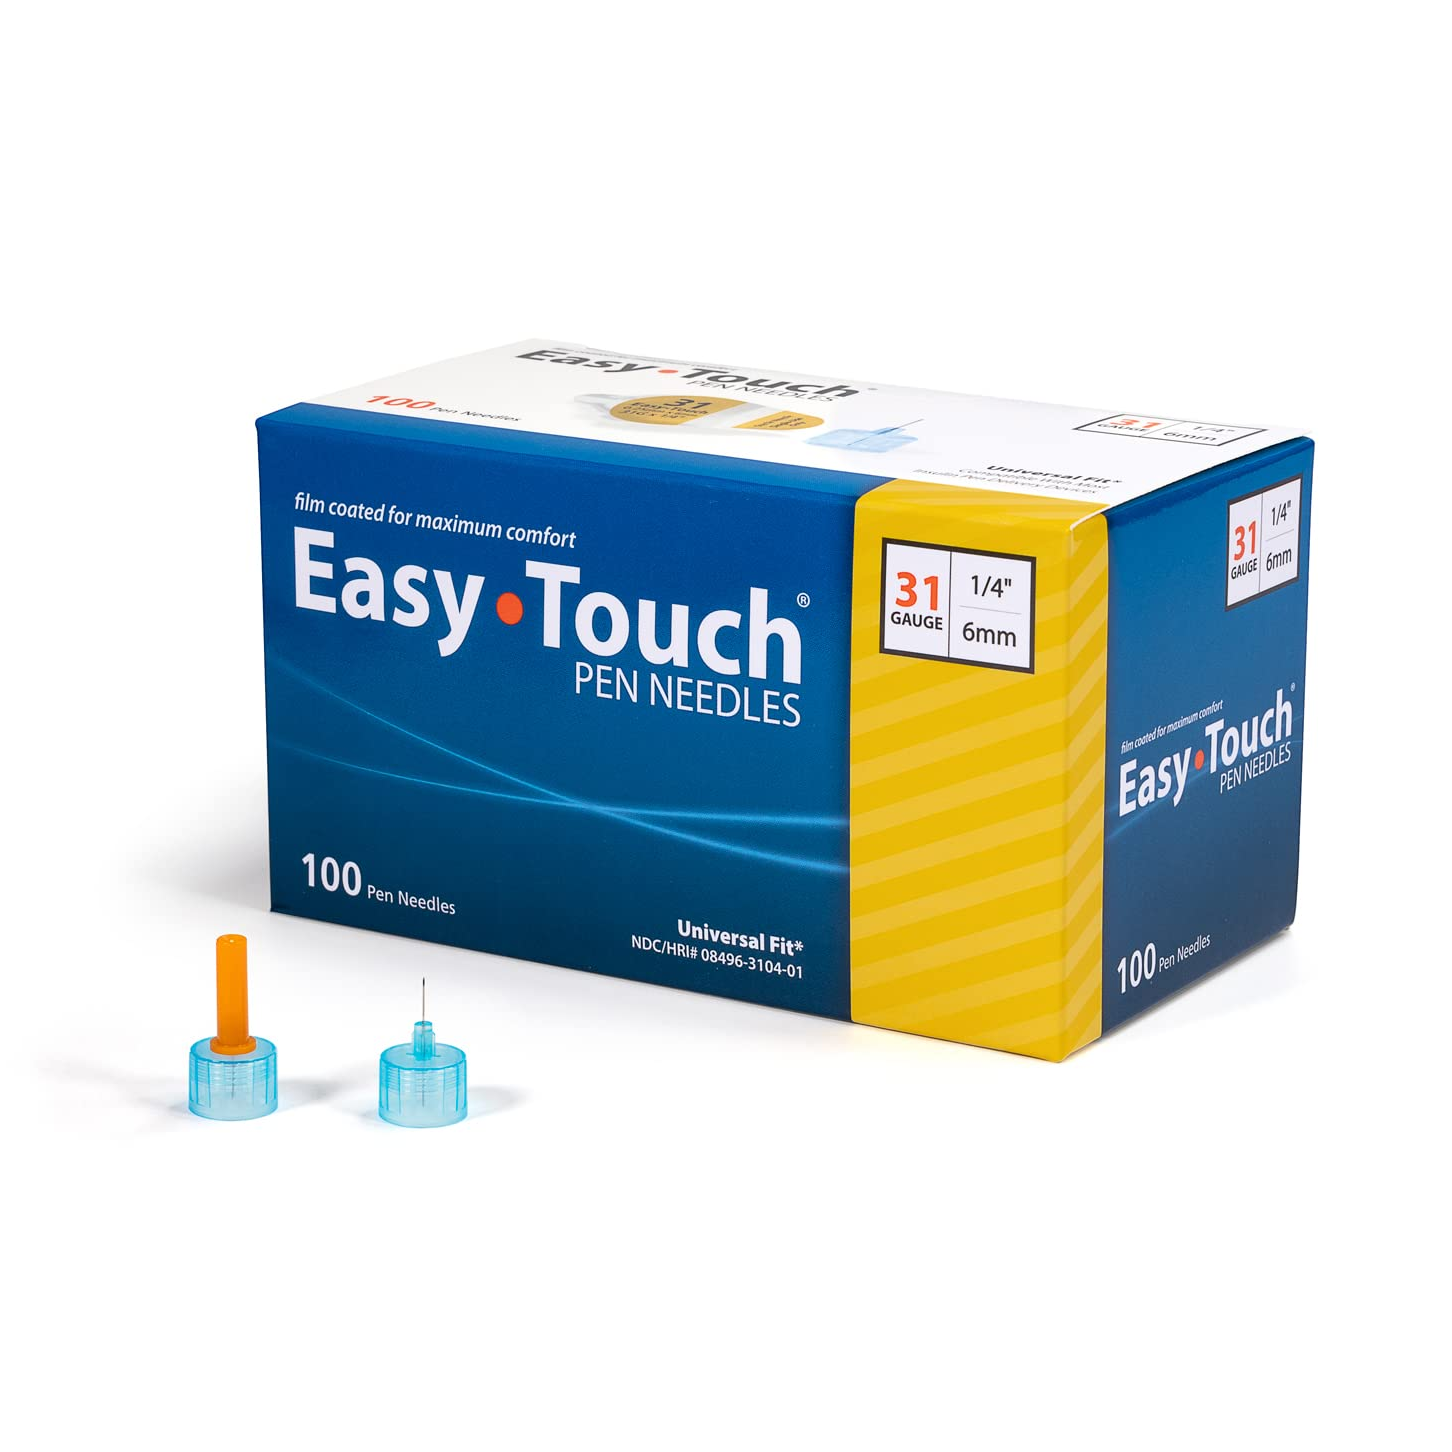 EasyTouch Pen Needle 31G 1/4 - BX 100